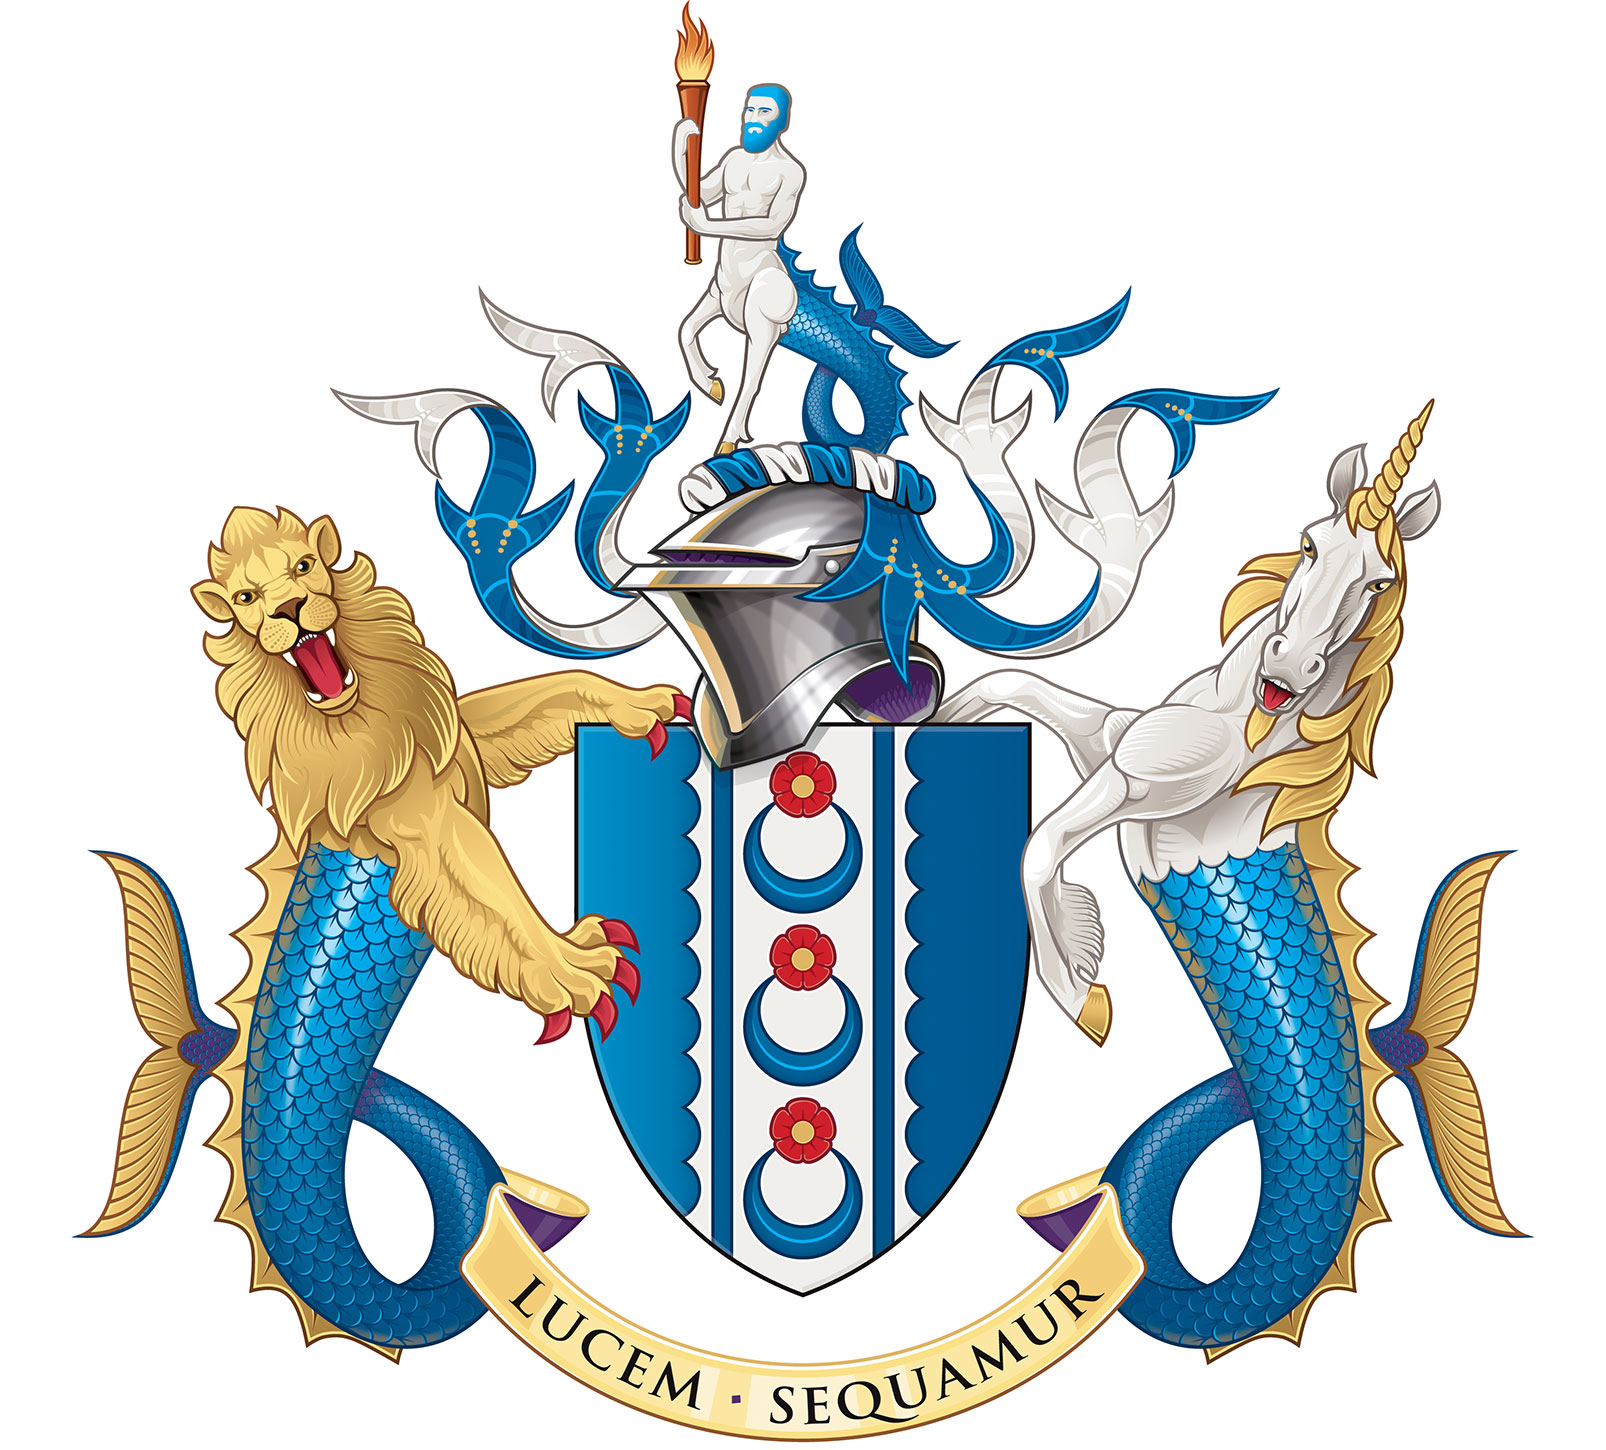 University of Portsmouth crest